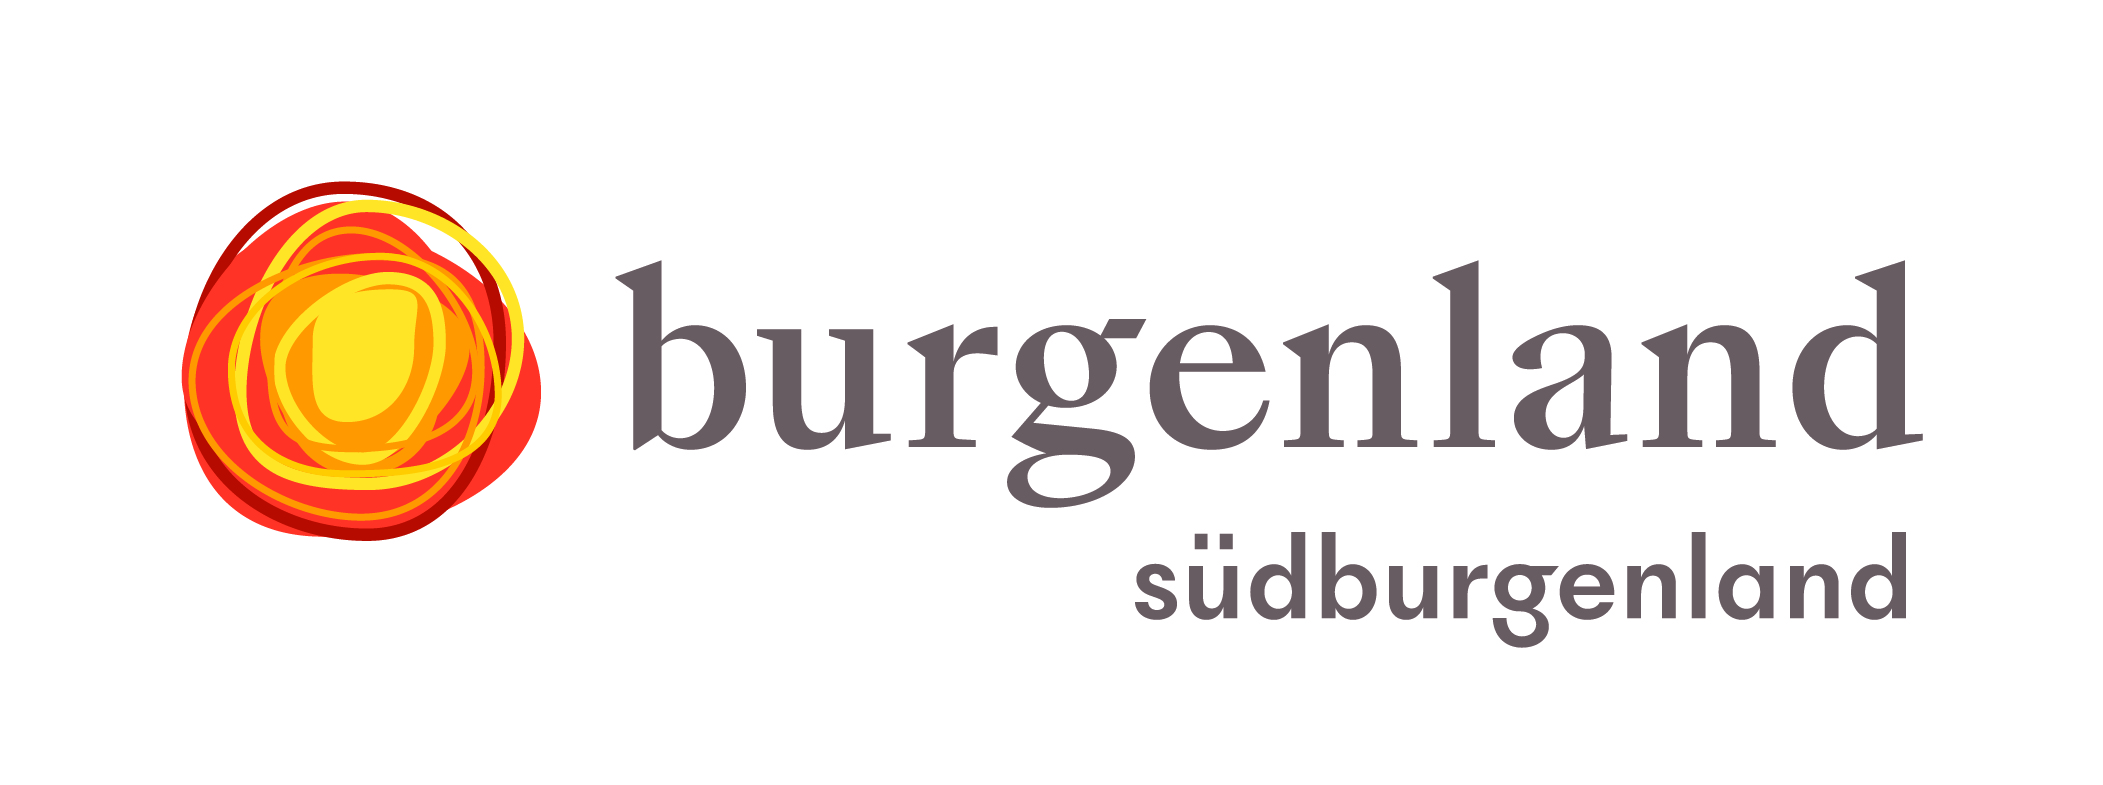 marke burgenland logo sb pos